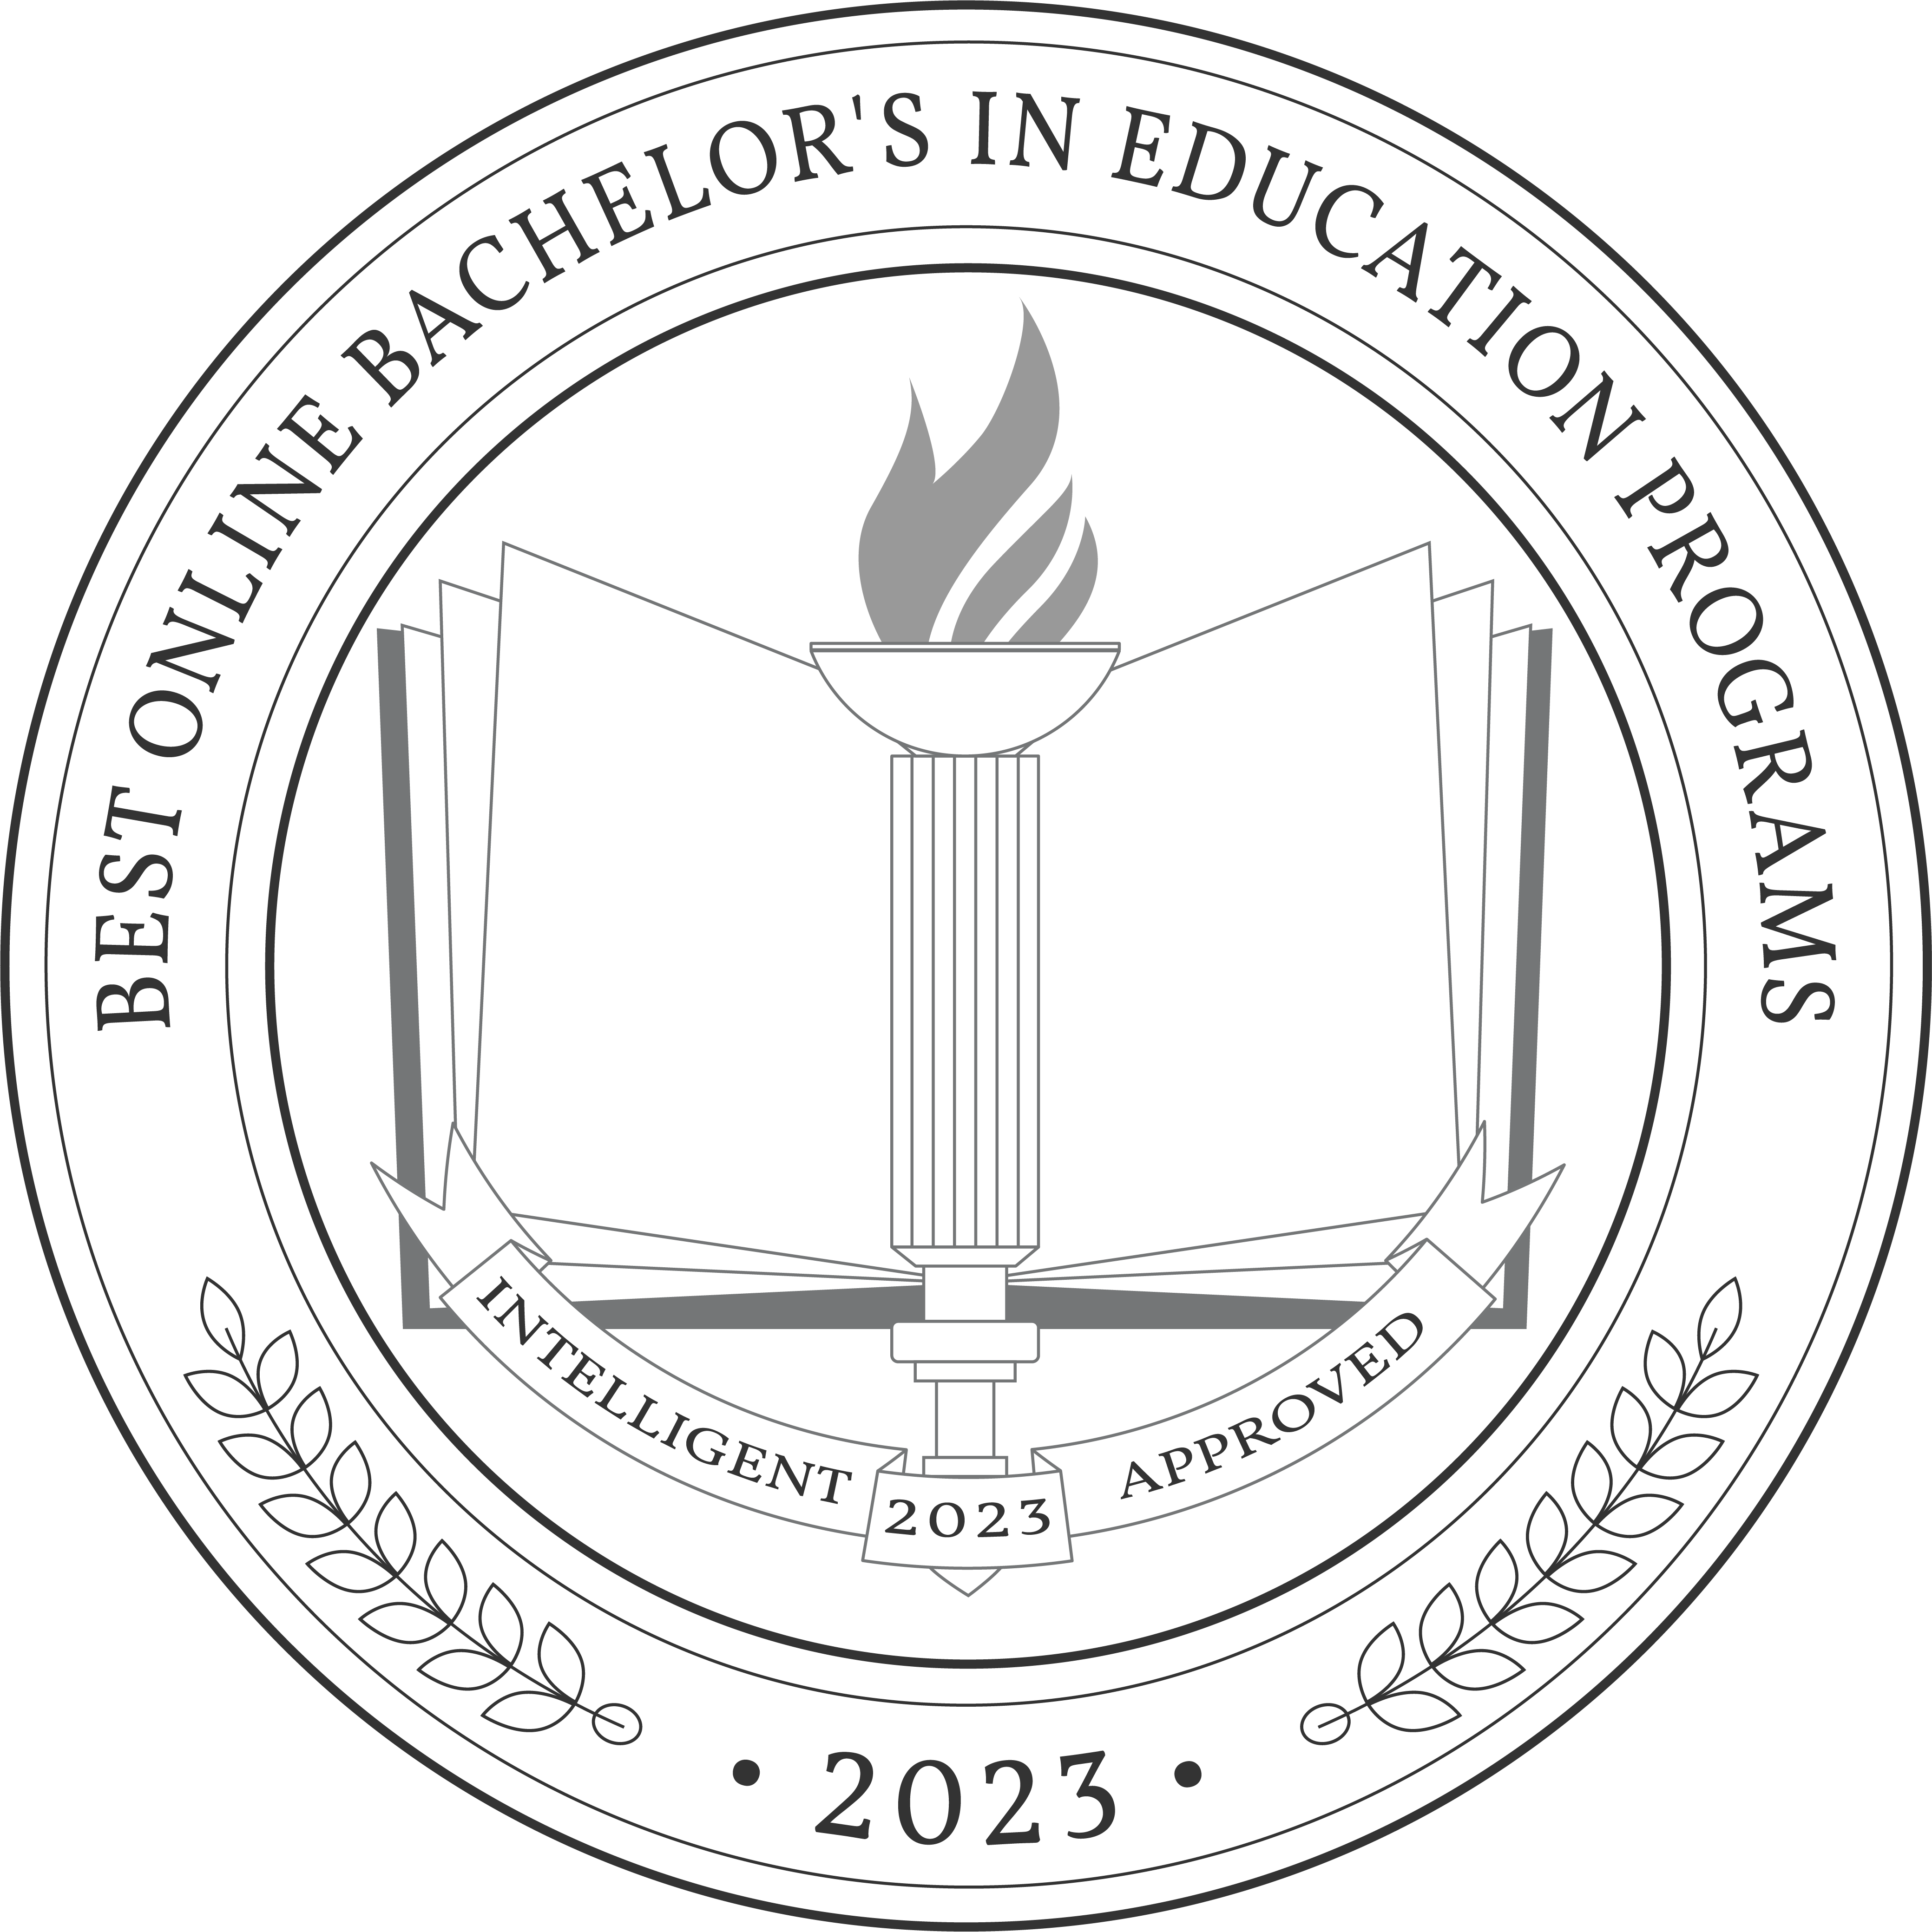 Best Online Bachelor's in Education Programs badge